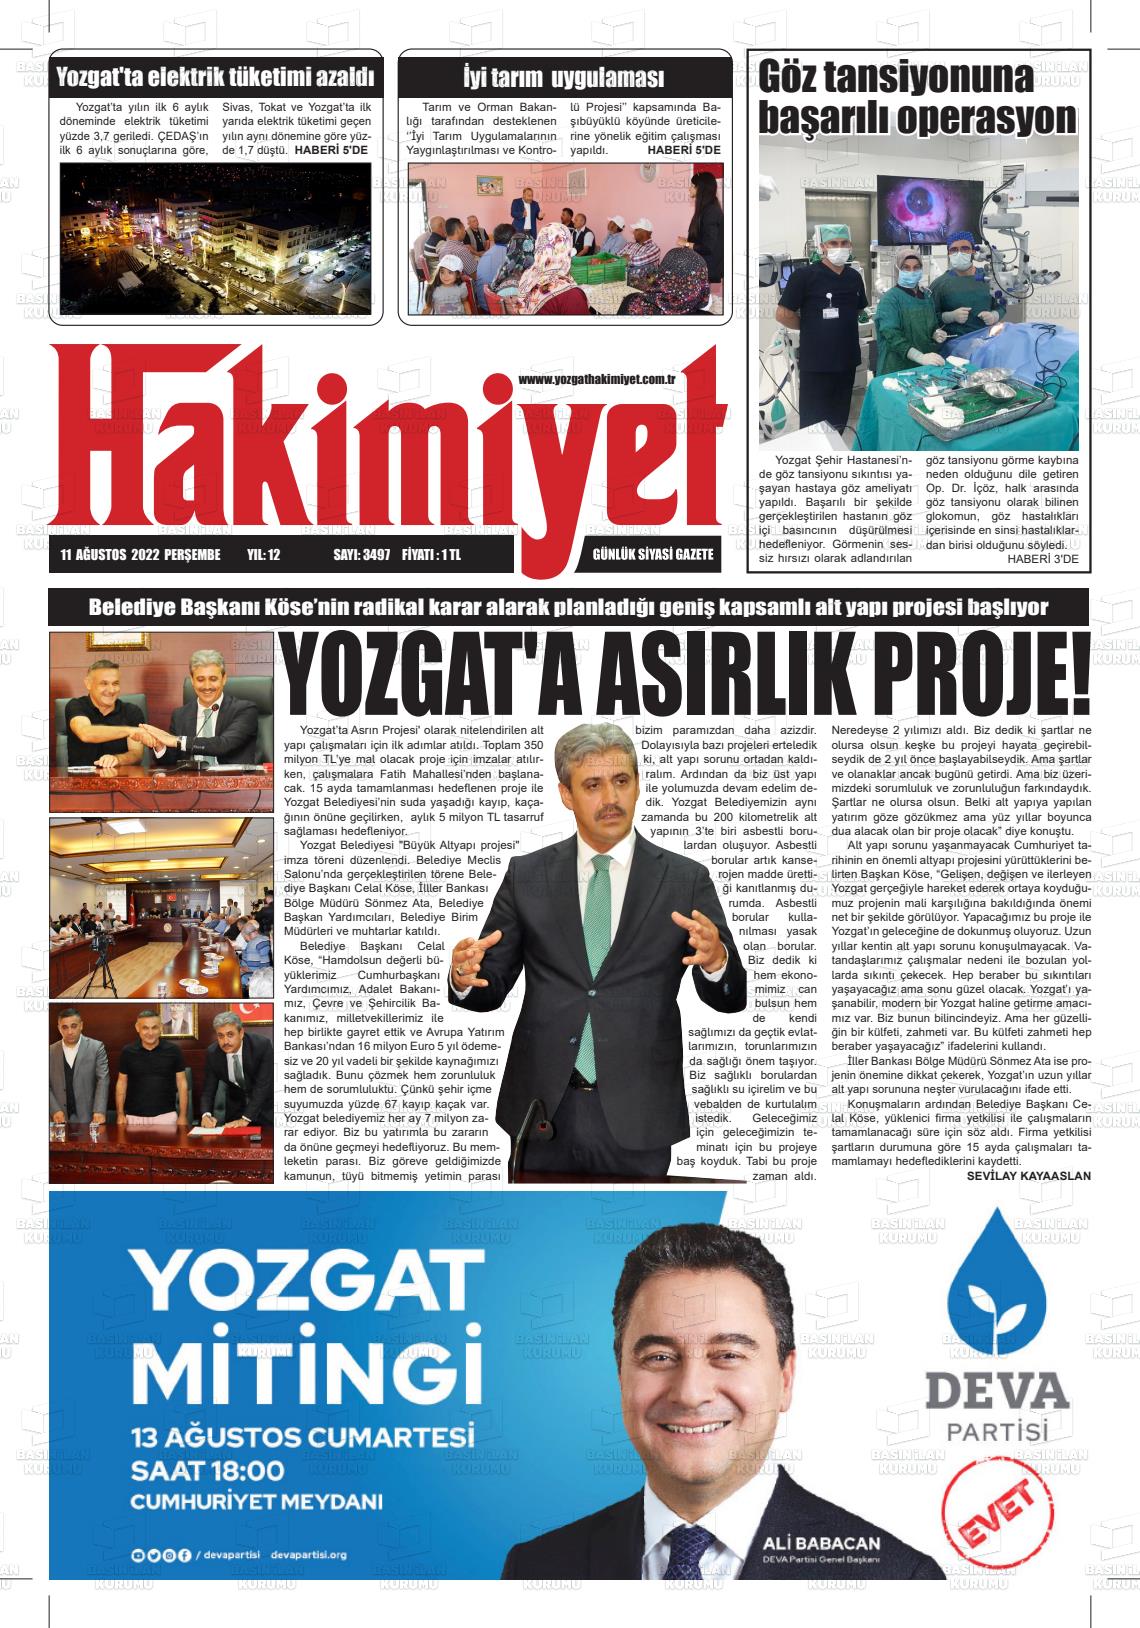 11 Ağustos 2022 Yozgat Hakimiyet Gazete Manşeti